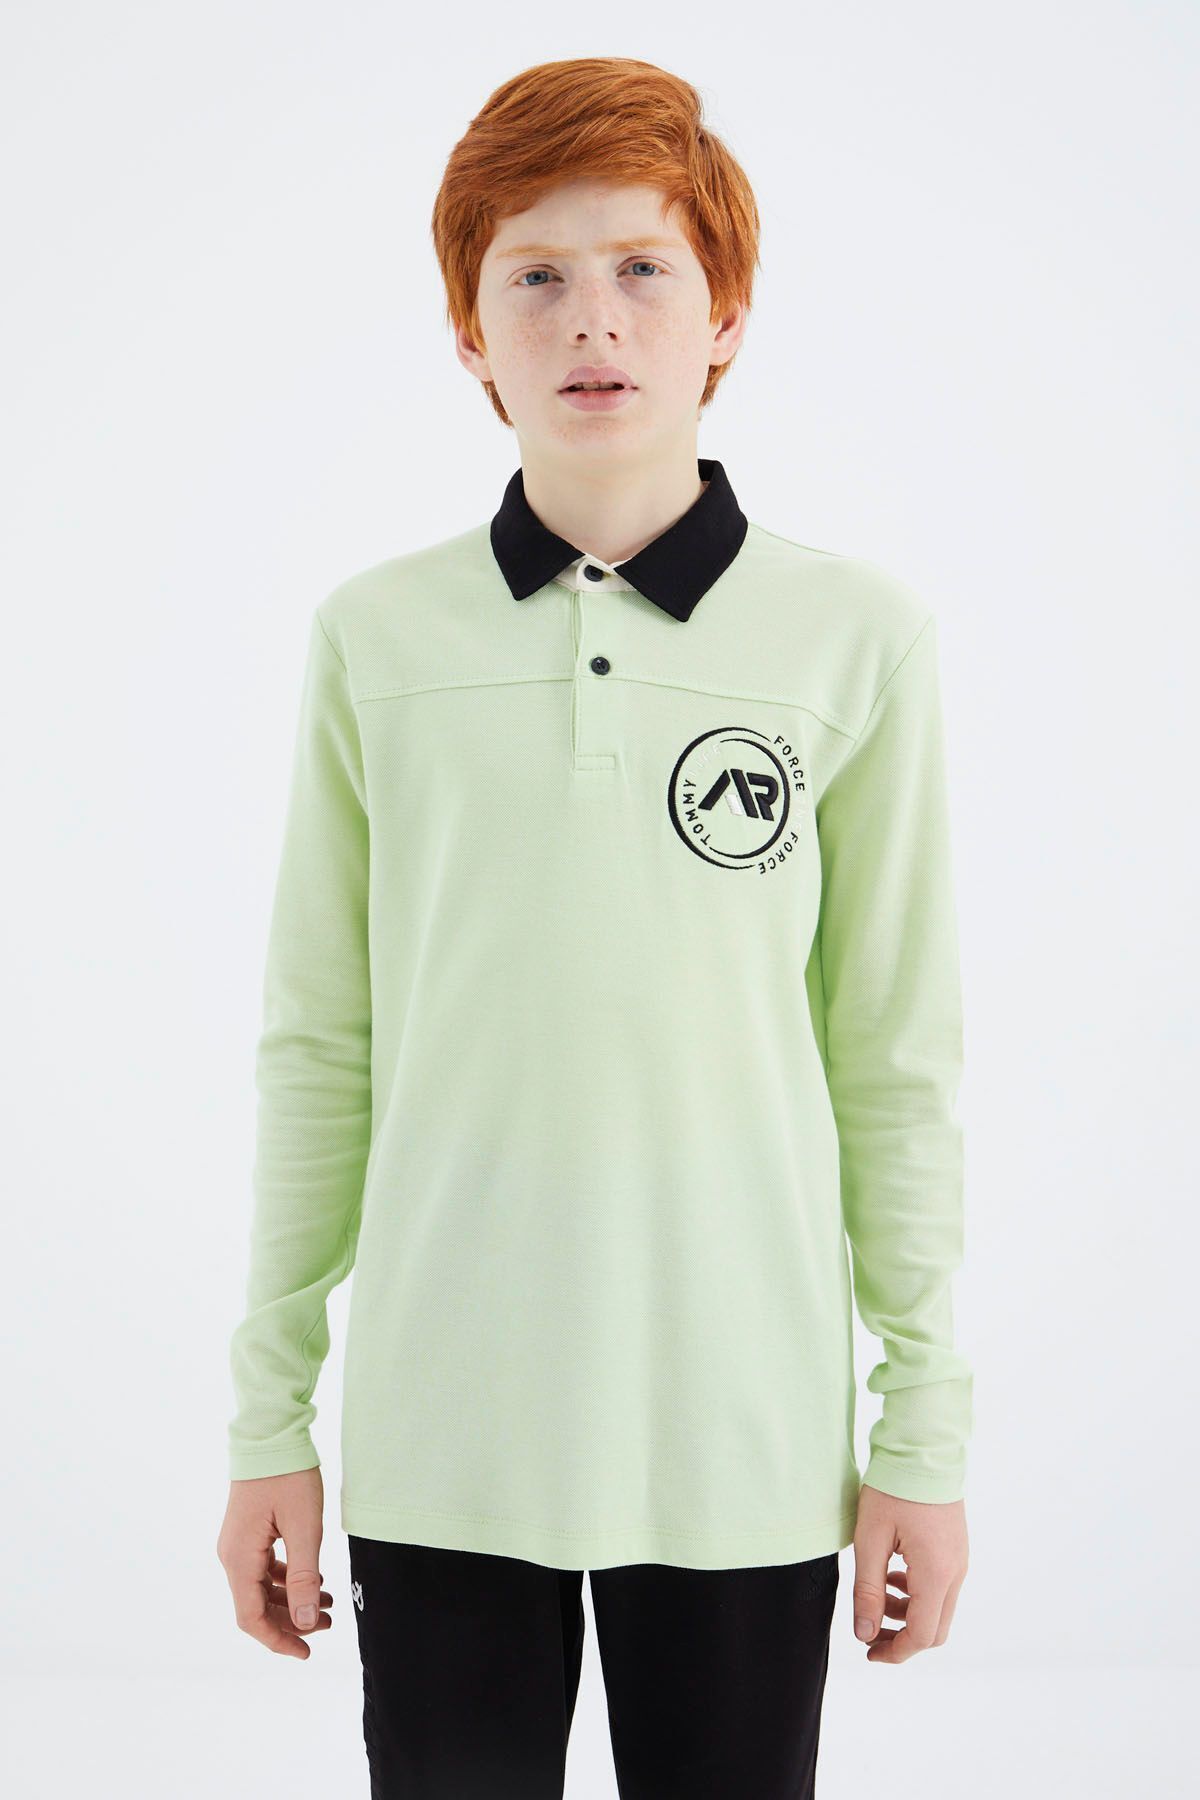 TOMMY LIFE Açık Yeşil Polo Yaka Erkek Çocuk T-Shirt - 11172